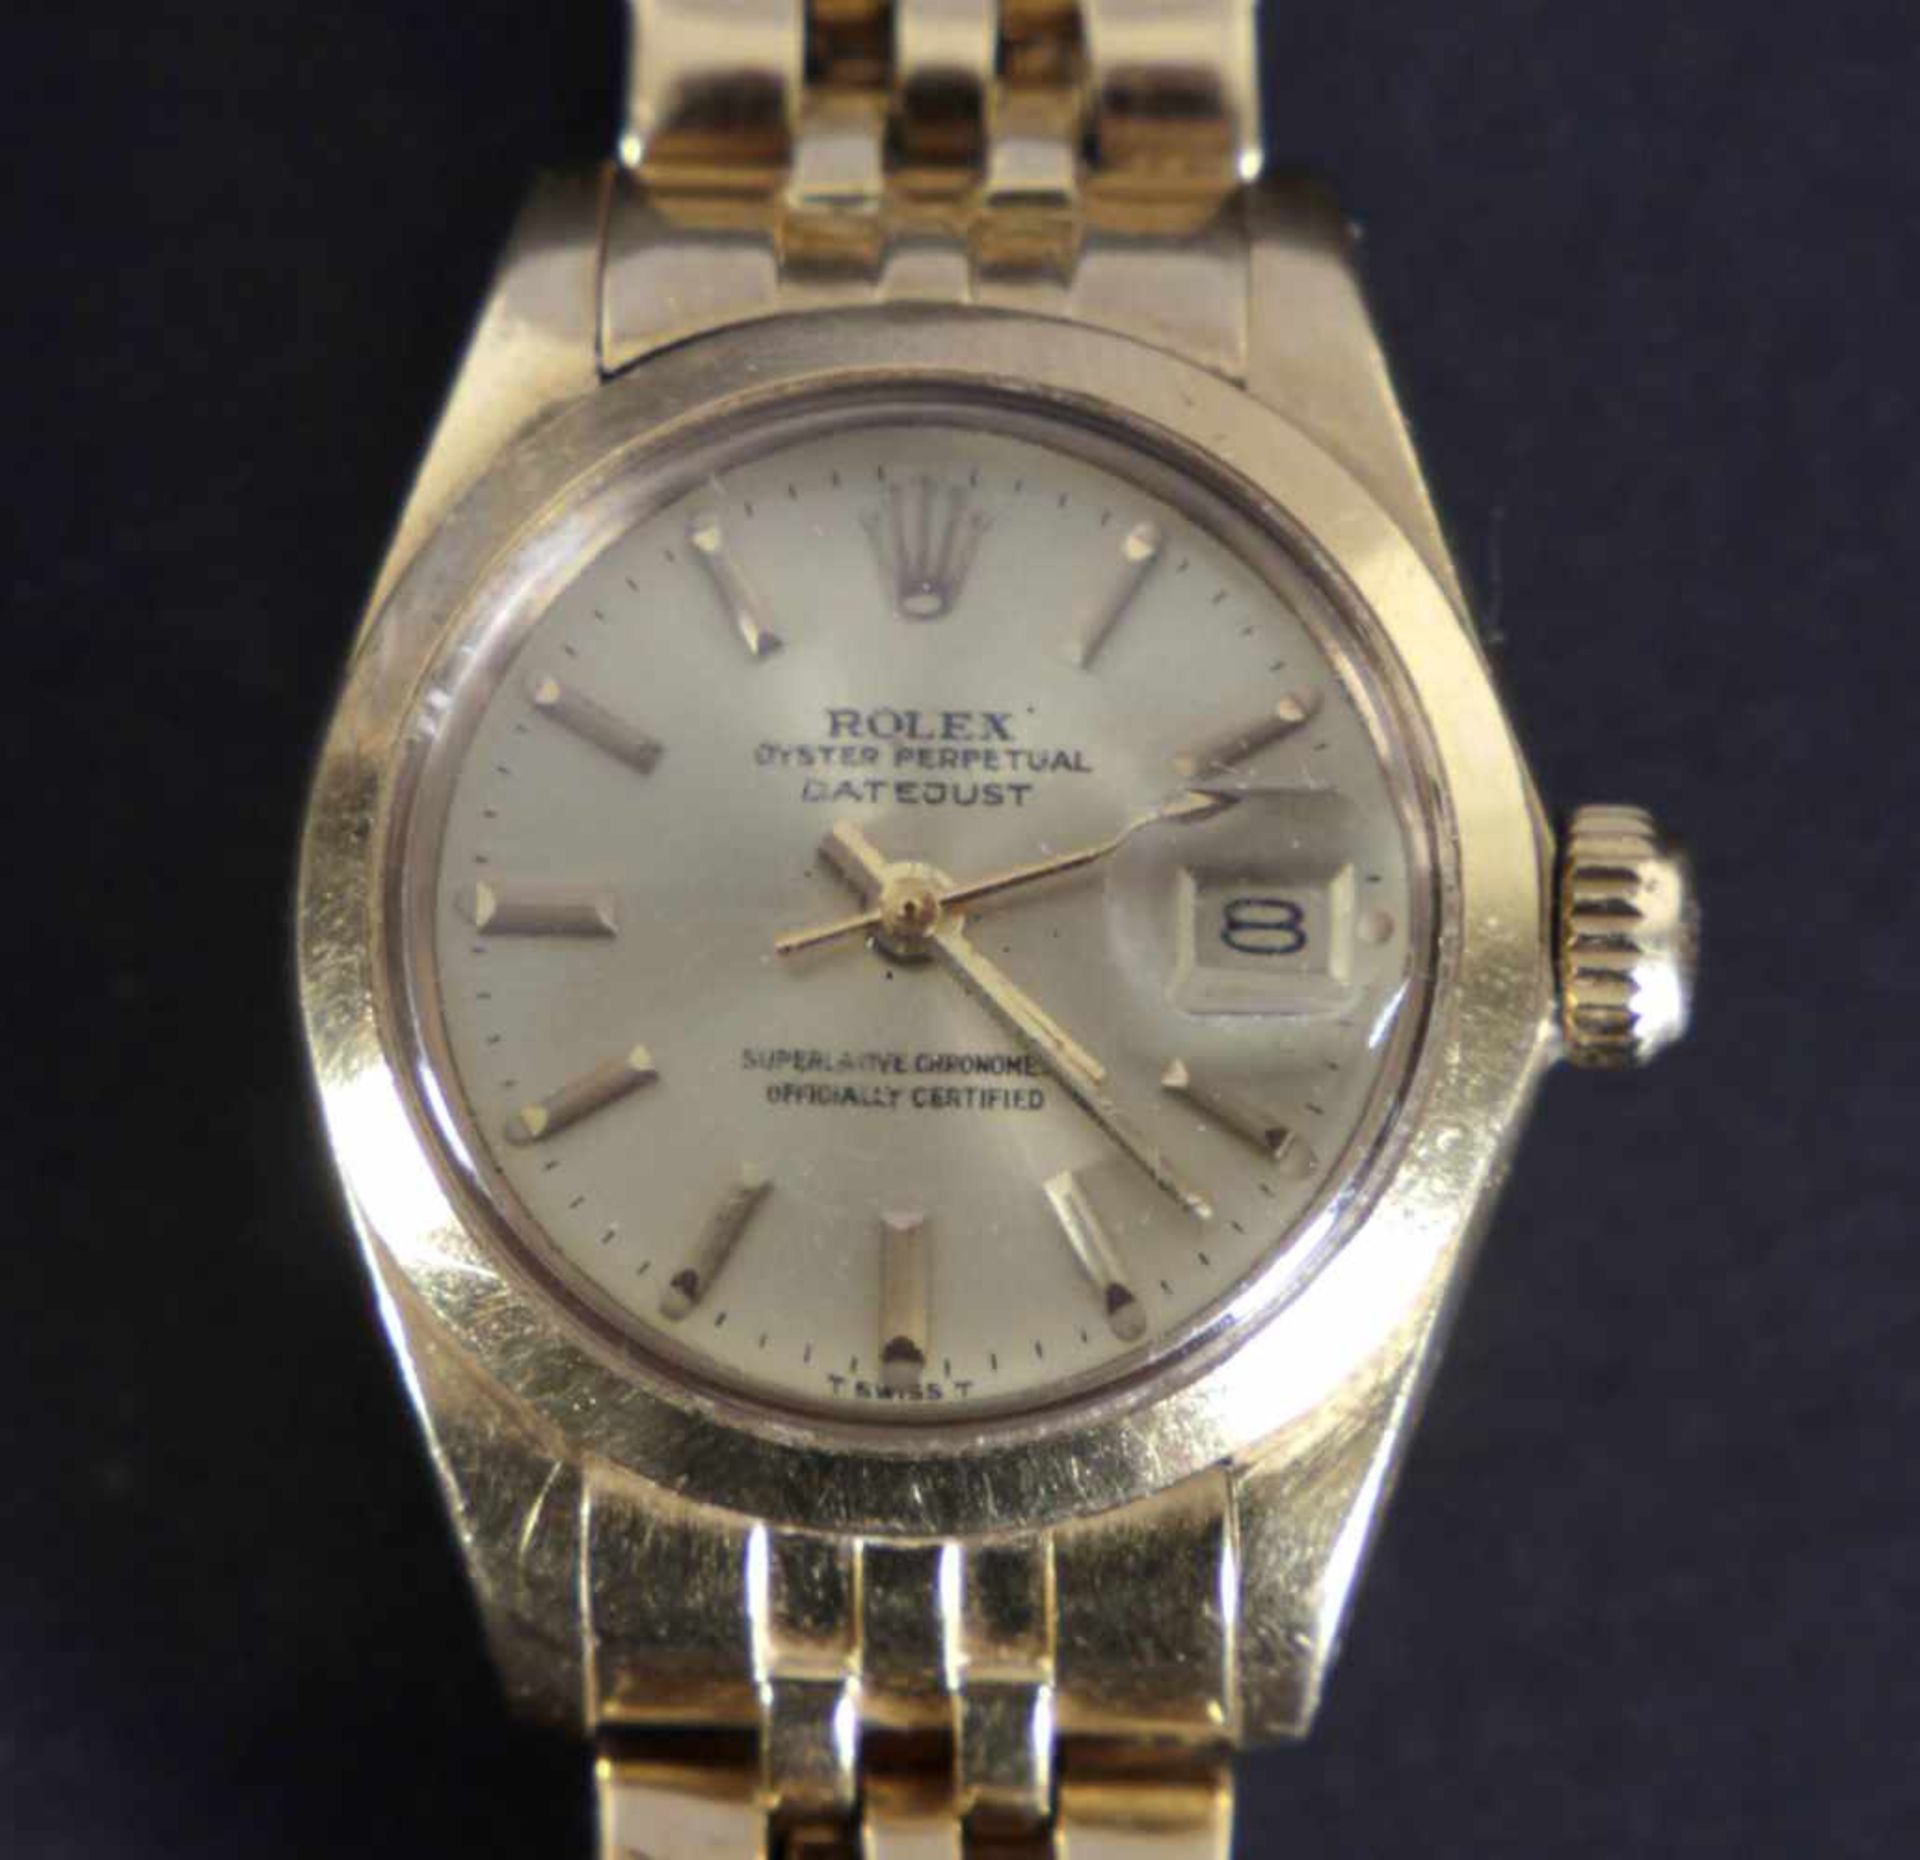 Rolex Oyster Perpetual, Datejust, Damenuhr, 750er GG, 1979